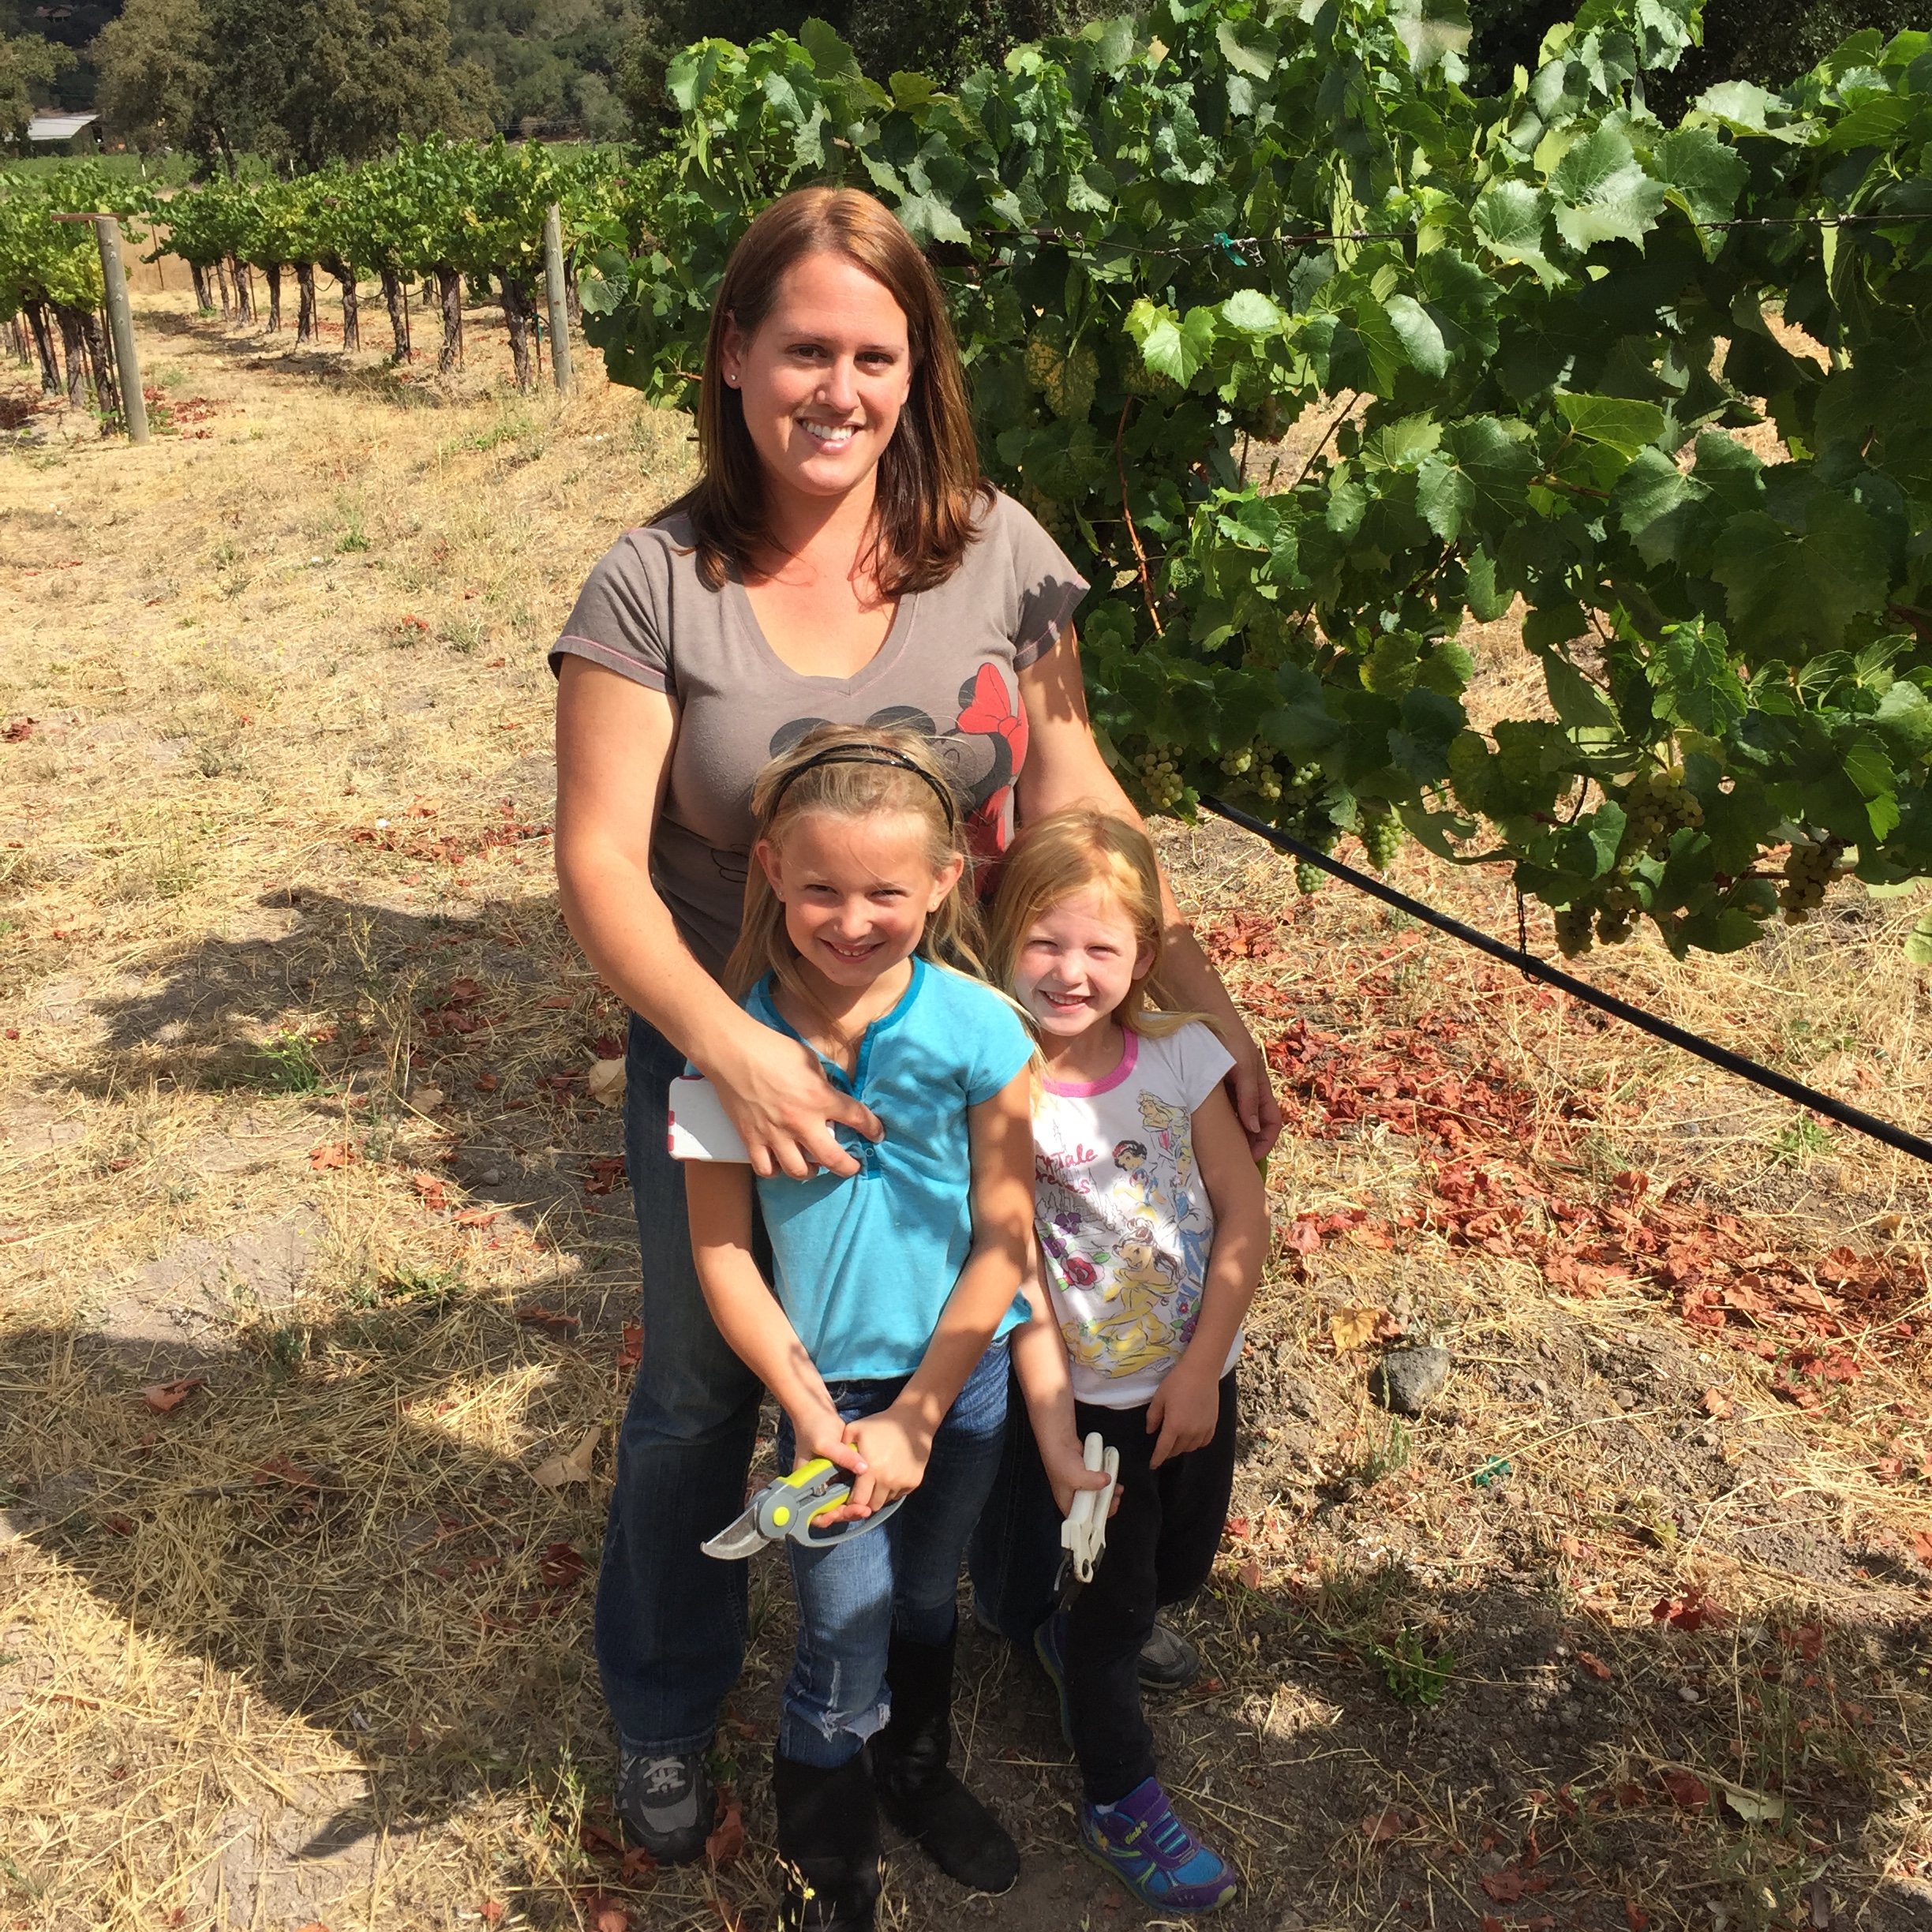 Mom and Girls in Vineyard